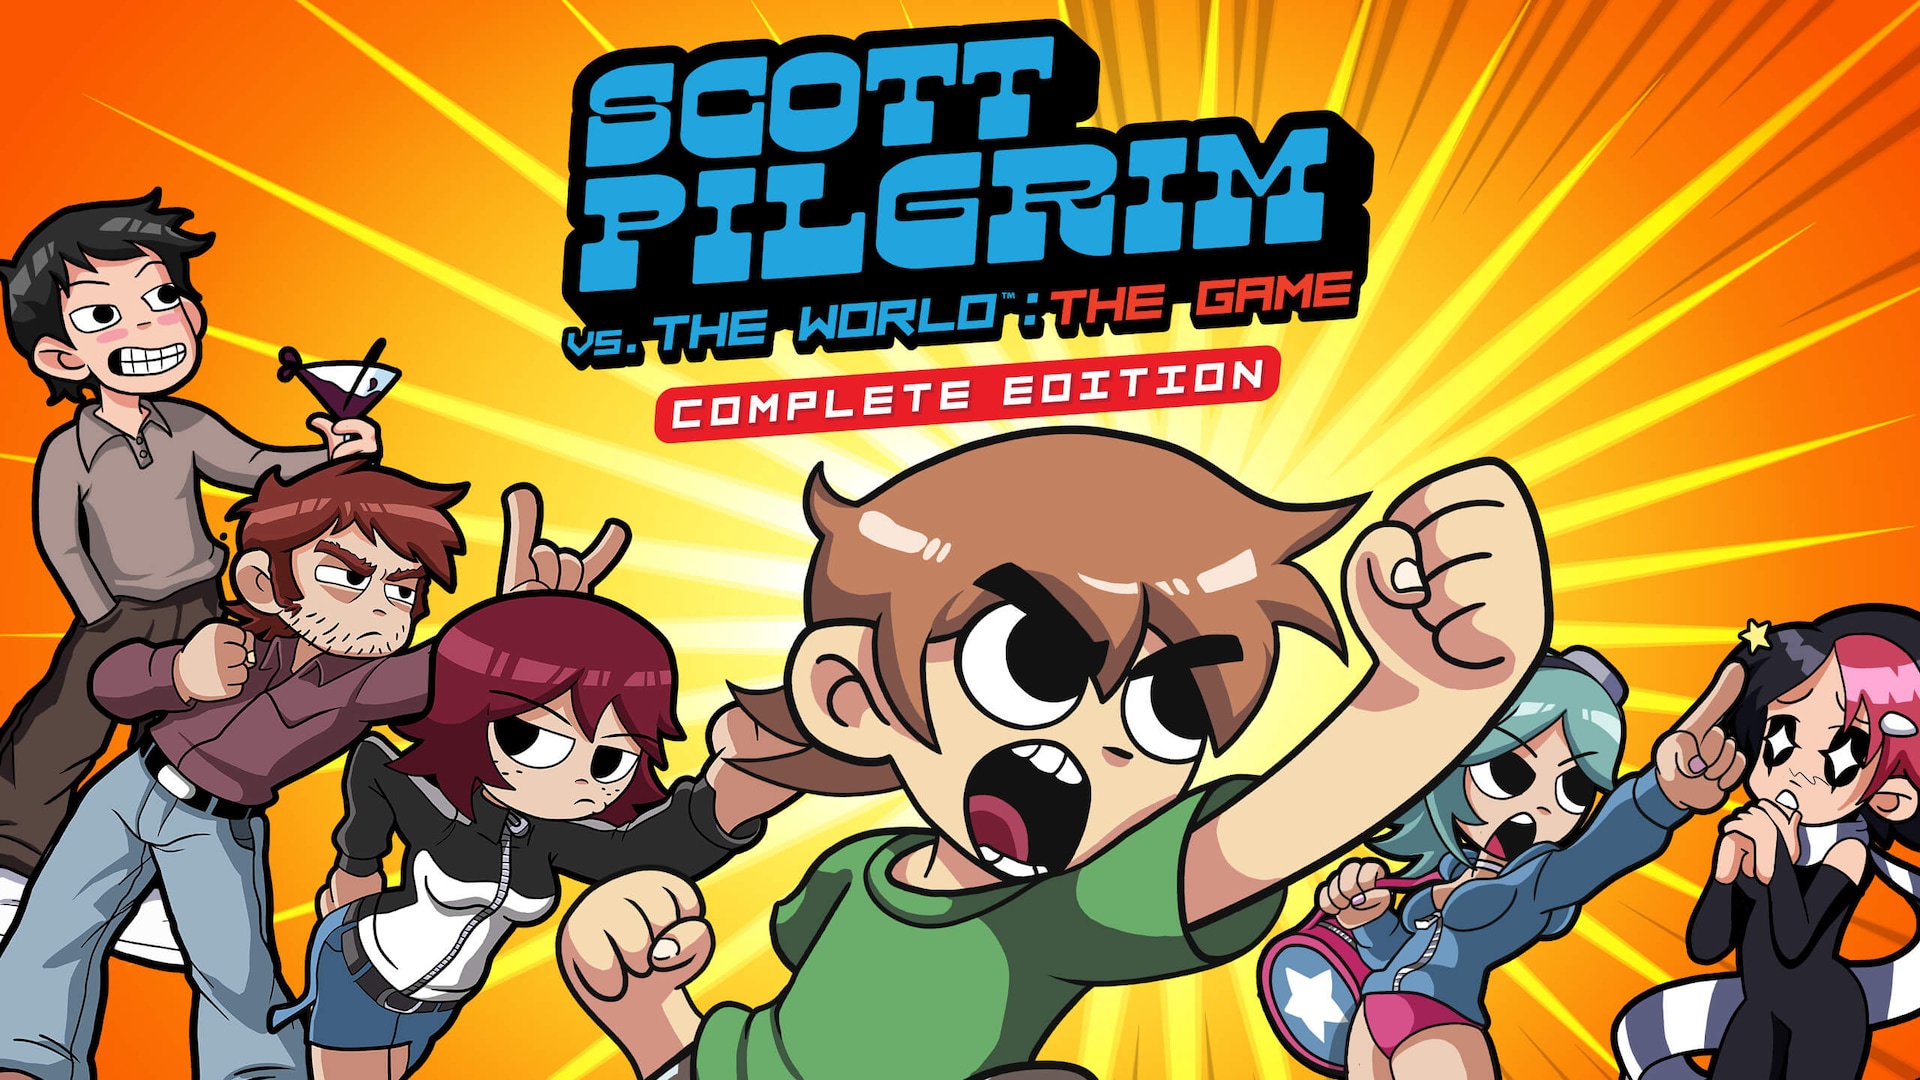 Scott Pilgrim Vs The World The Game Edizione Completa